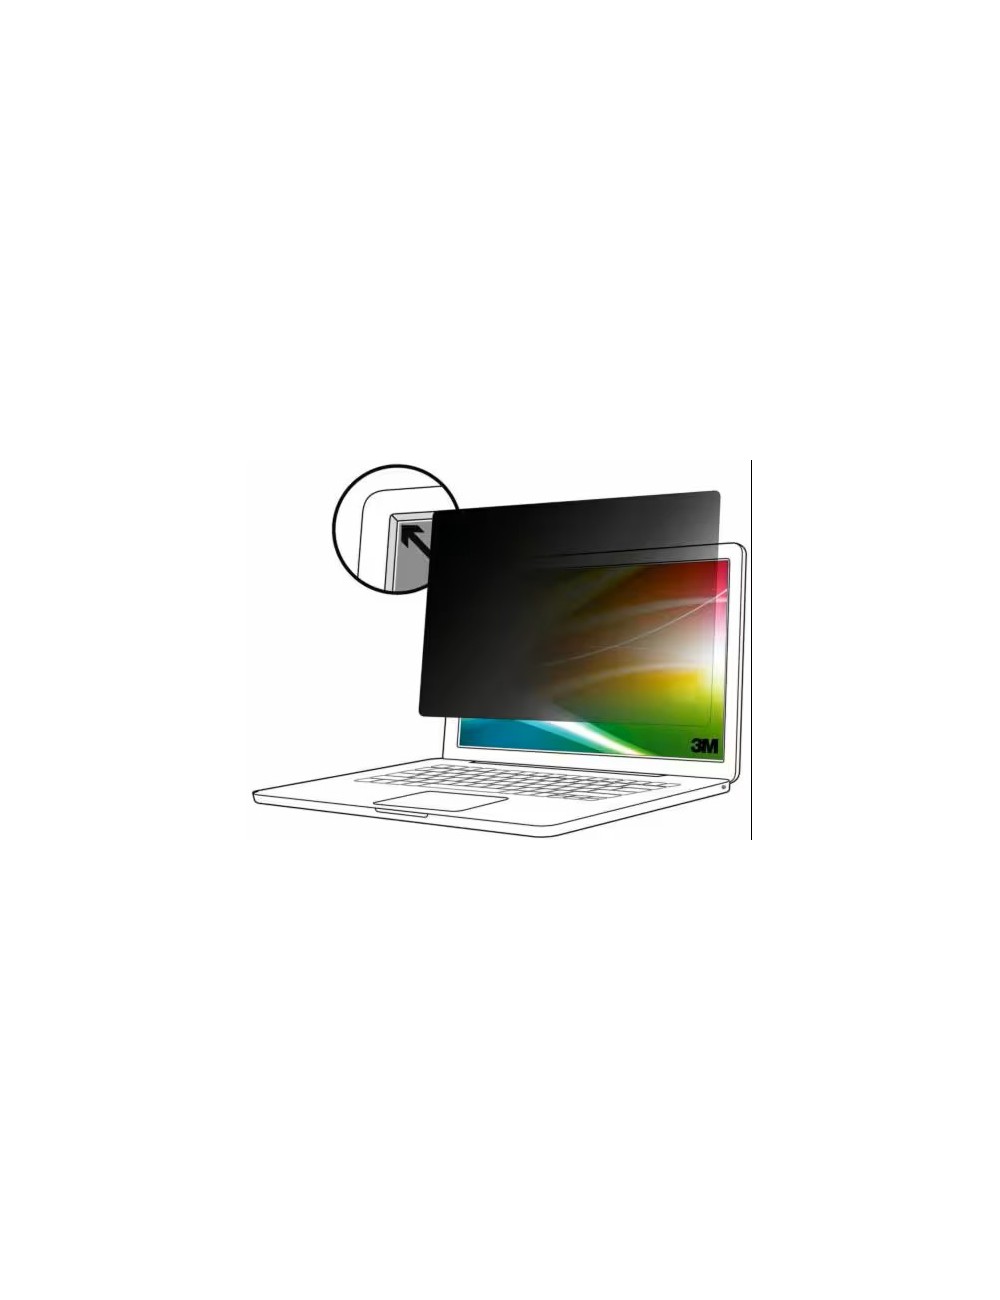 3M Filtro privacidad Bright Screen Microsoft® Surface® Laptop 1, 2 13.5 pulg, 3 2, BPNMS001